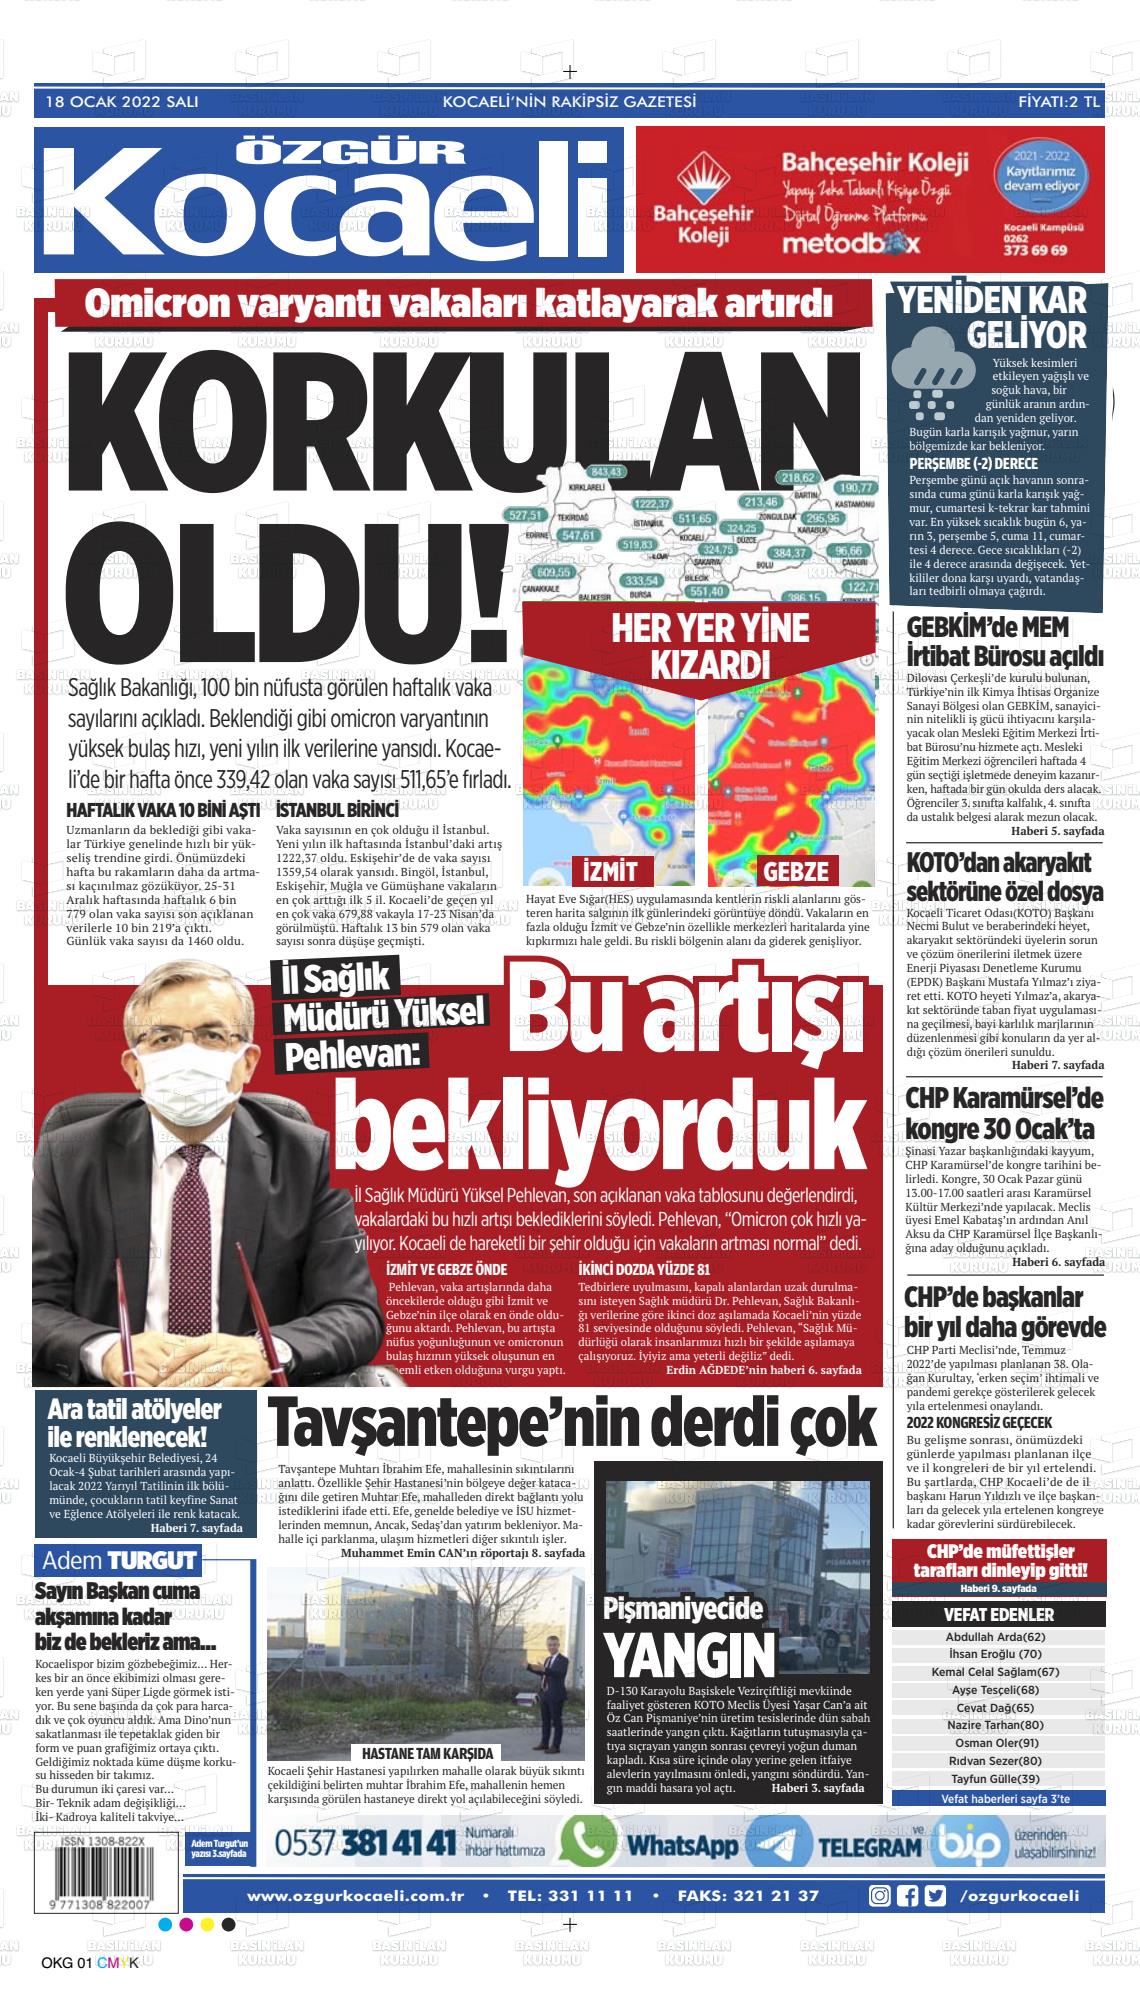 18 Ocak 2022 Özgür Kocaeli Gazete Manşeti